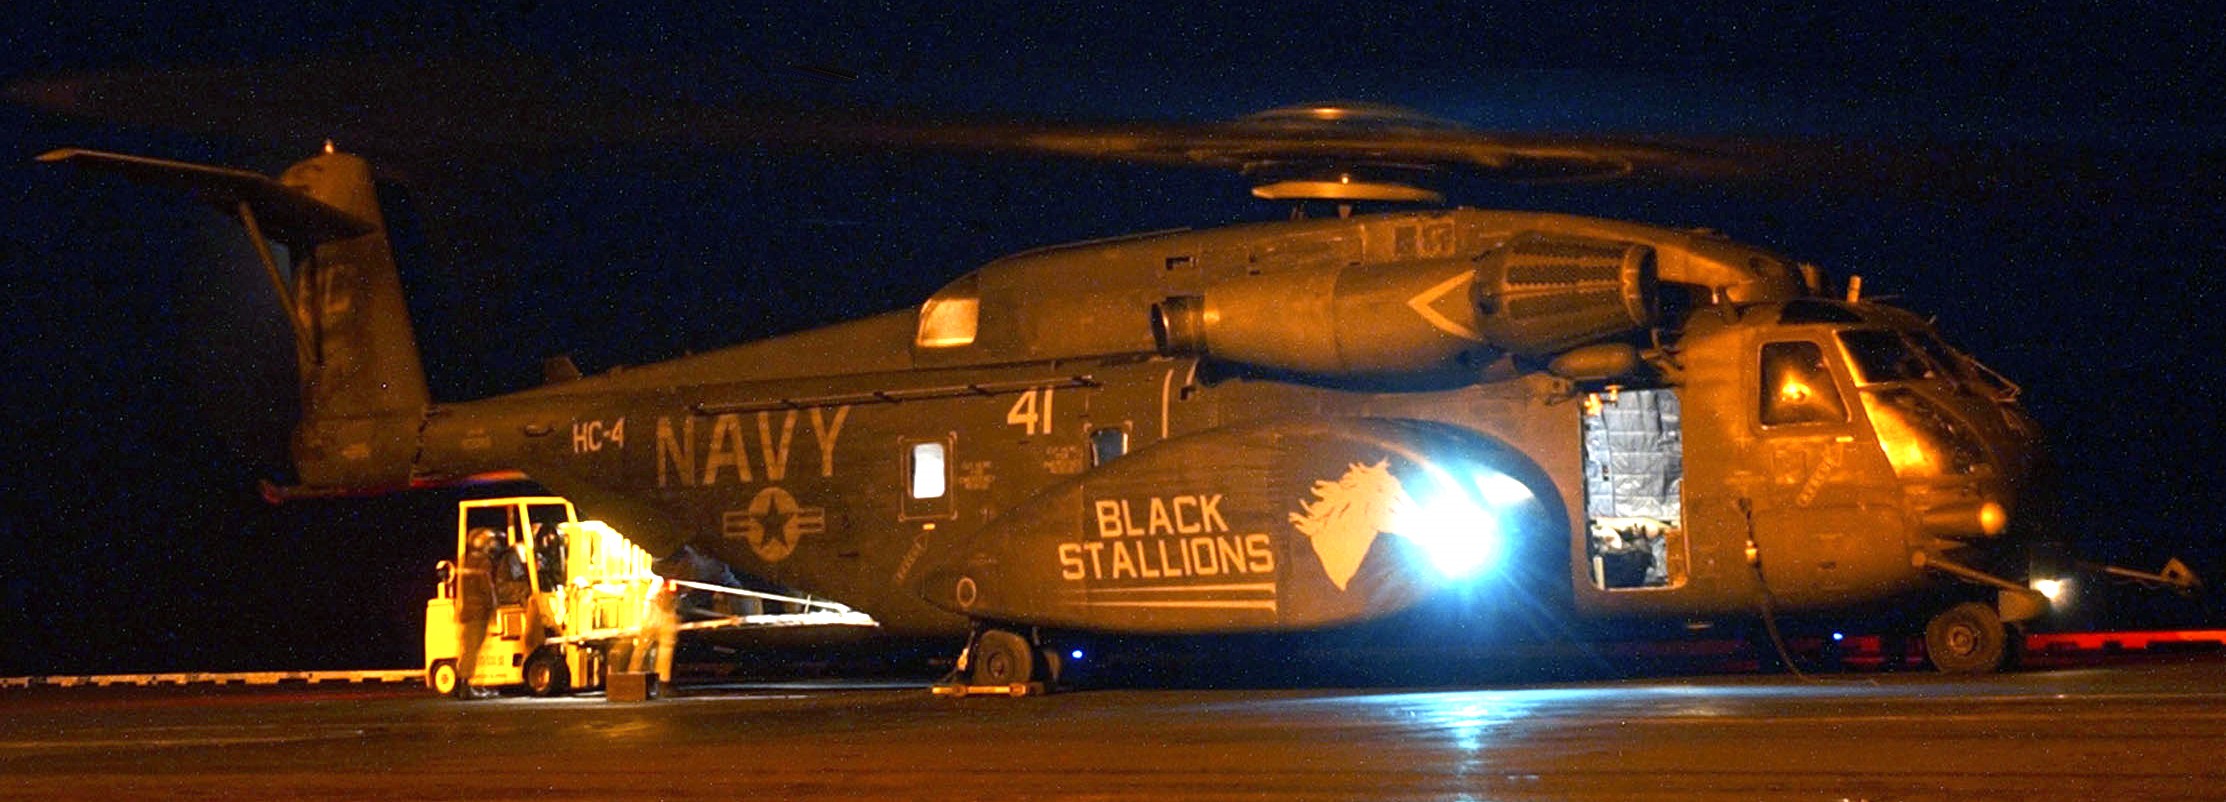 hc-4 black stallions helicopter combat support squadron mh-53e sea dragon 14